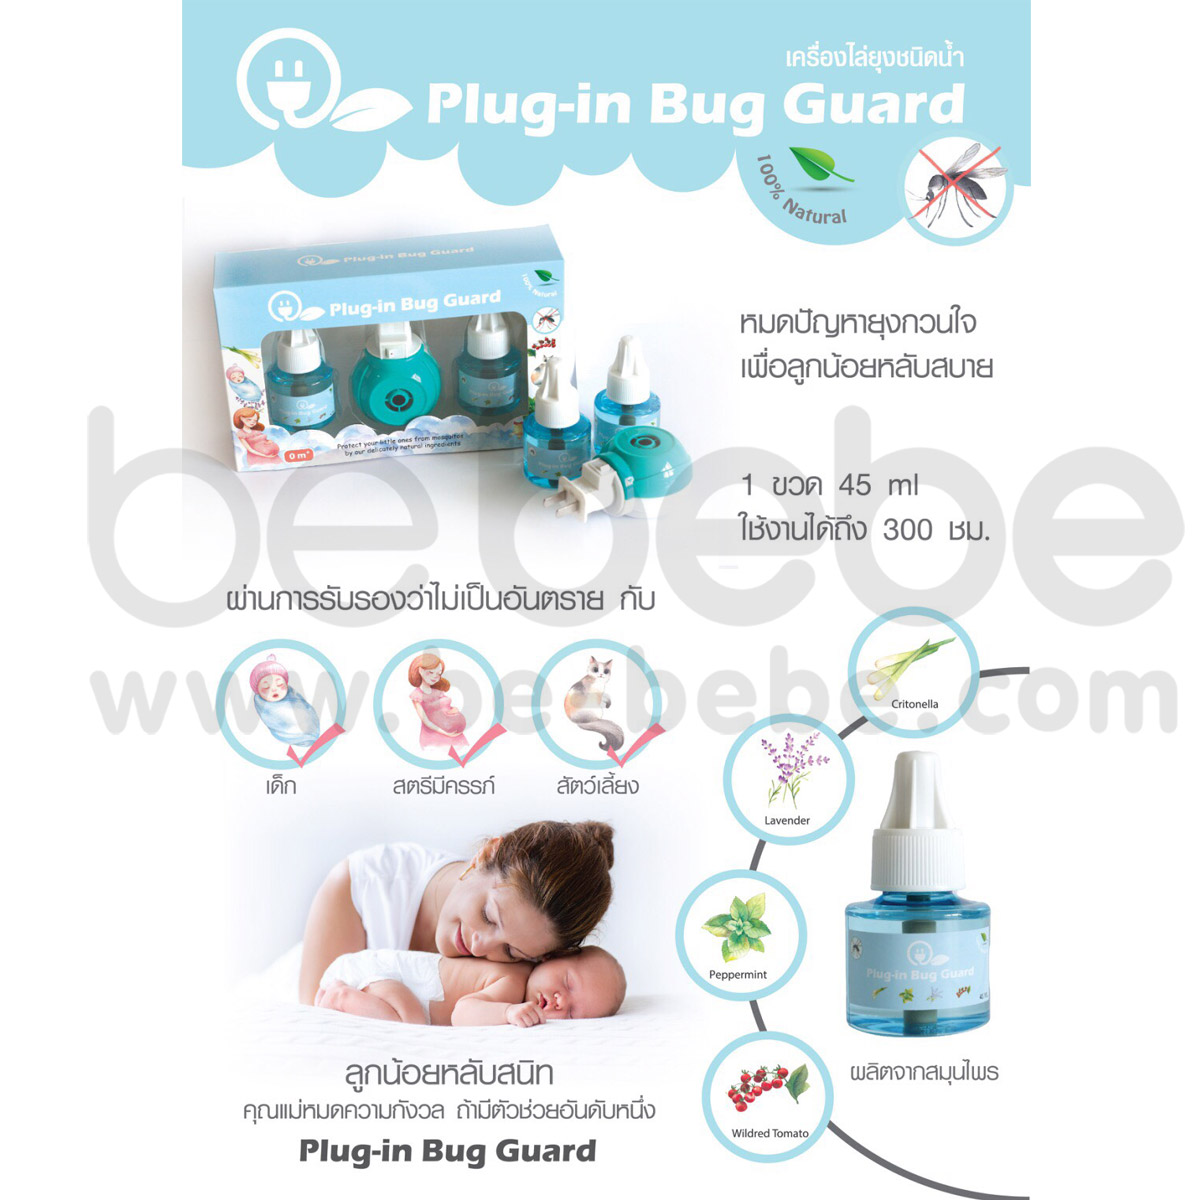 Refill Plug-in Bug Guard : ยากันยุงชนิดน้ำแบบเติม  45 ml.